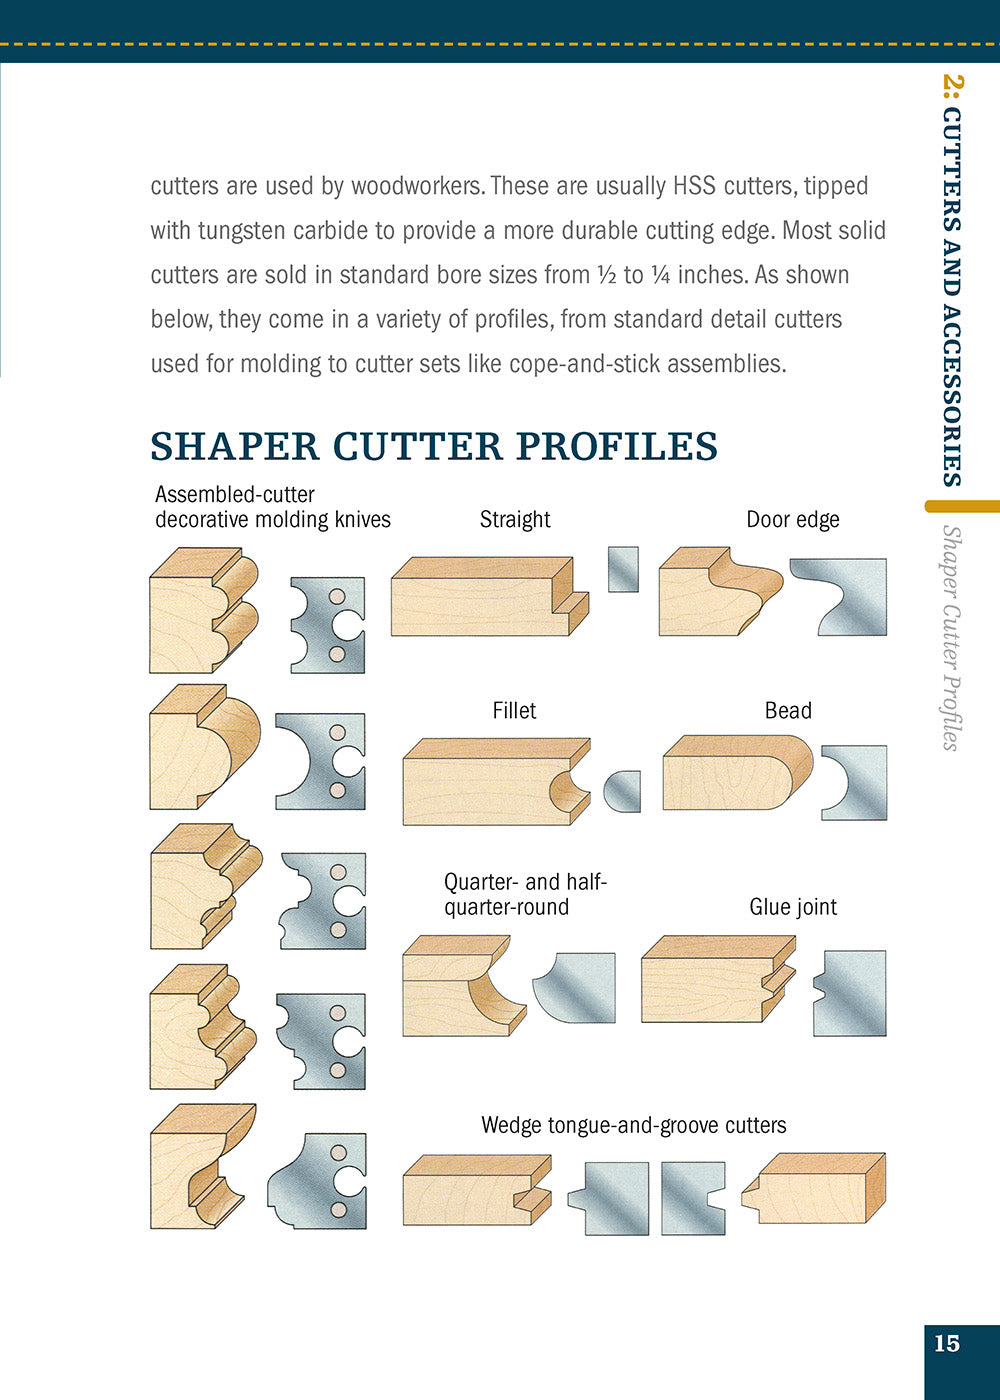 Shaper (Missing Shop Manual)